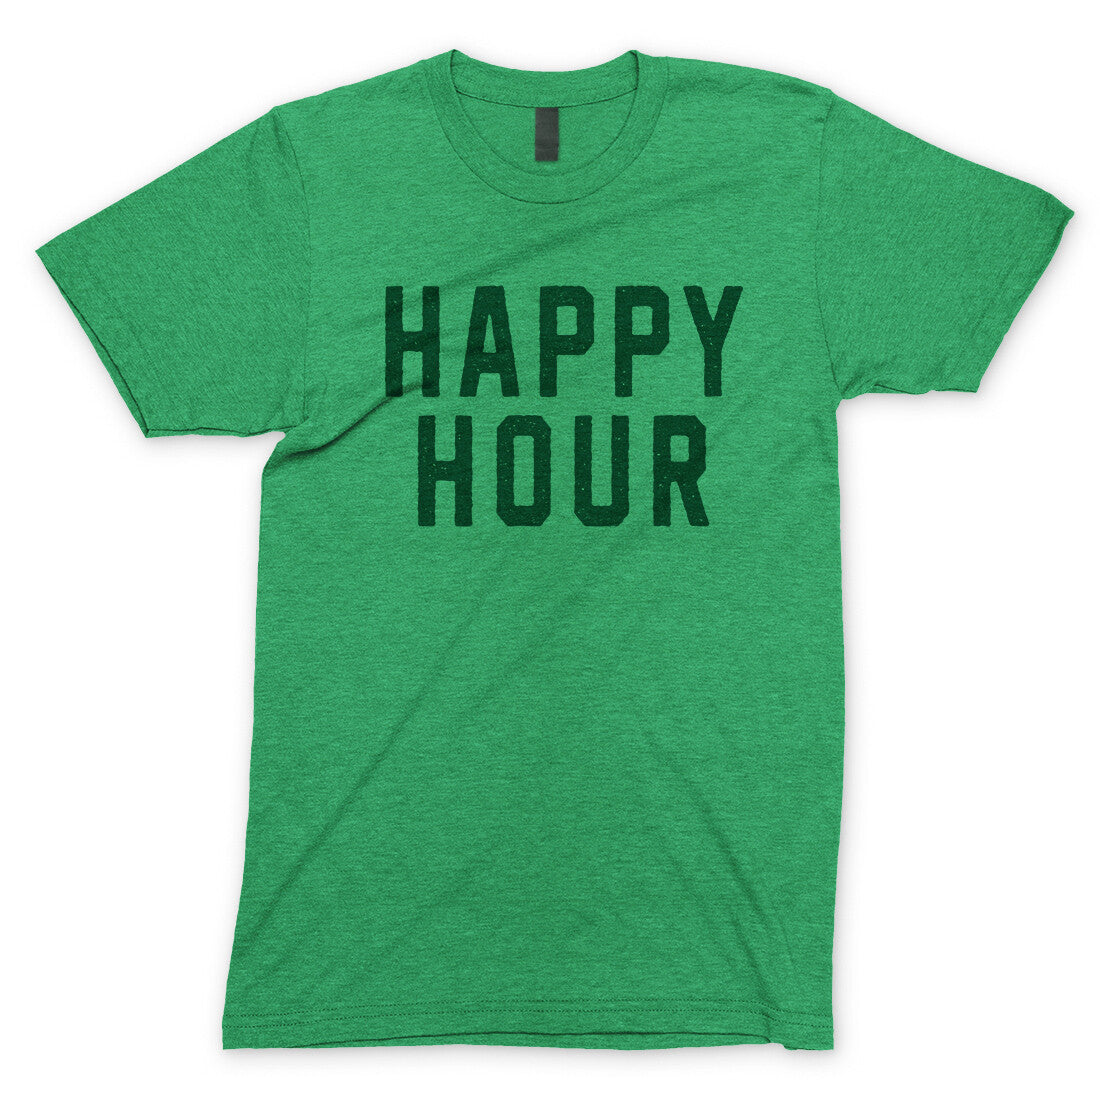 Happy Hour in Heather Irish Green Color